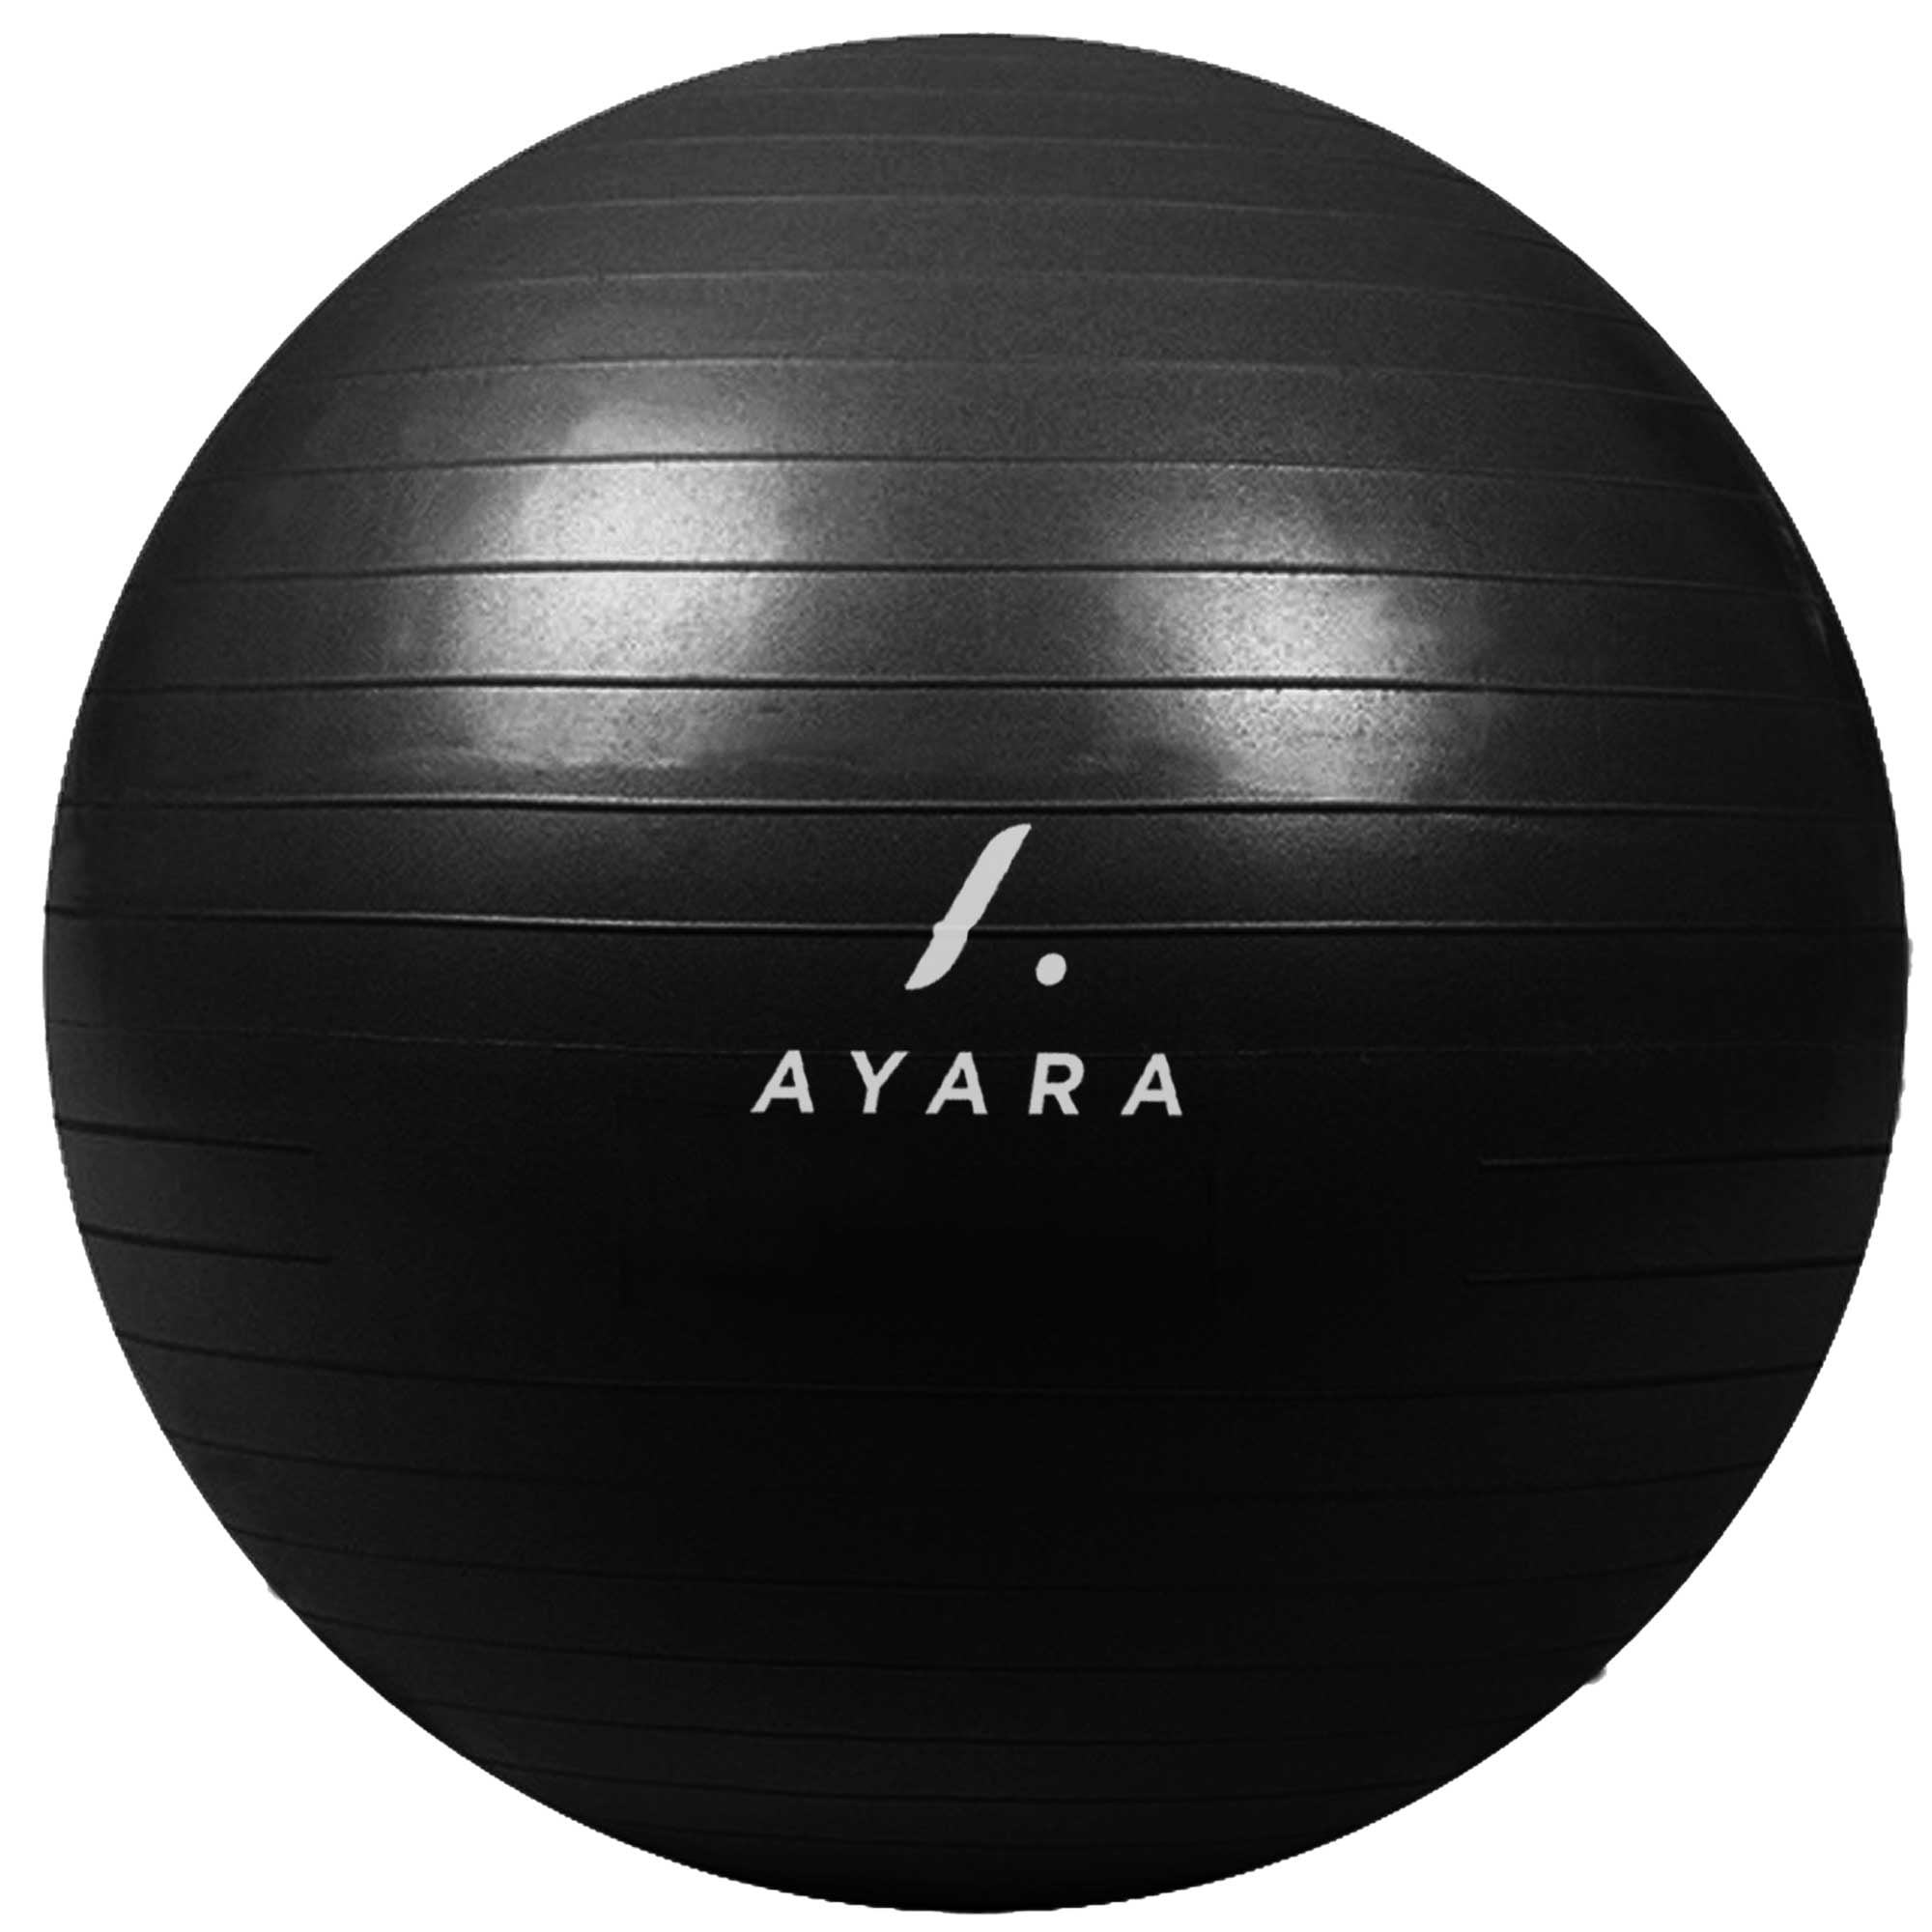 Pelota Pilates / Yoga / Fitness 55 Cm Con Bomba De Aire – AFxports